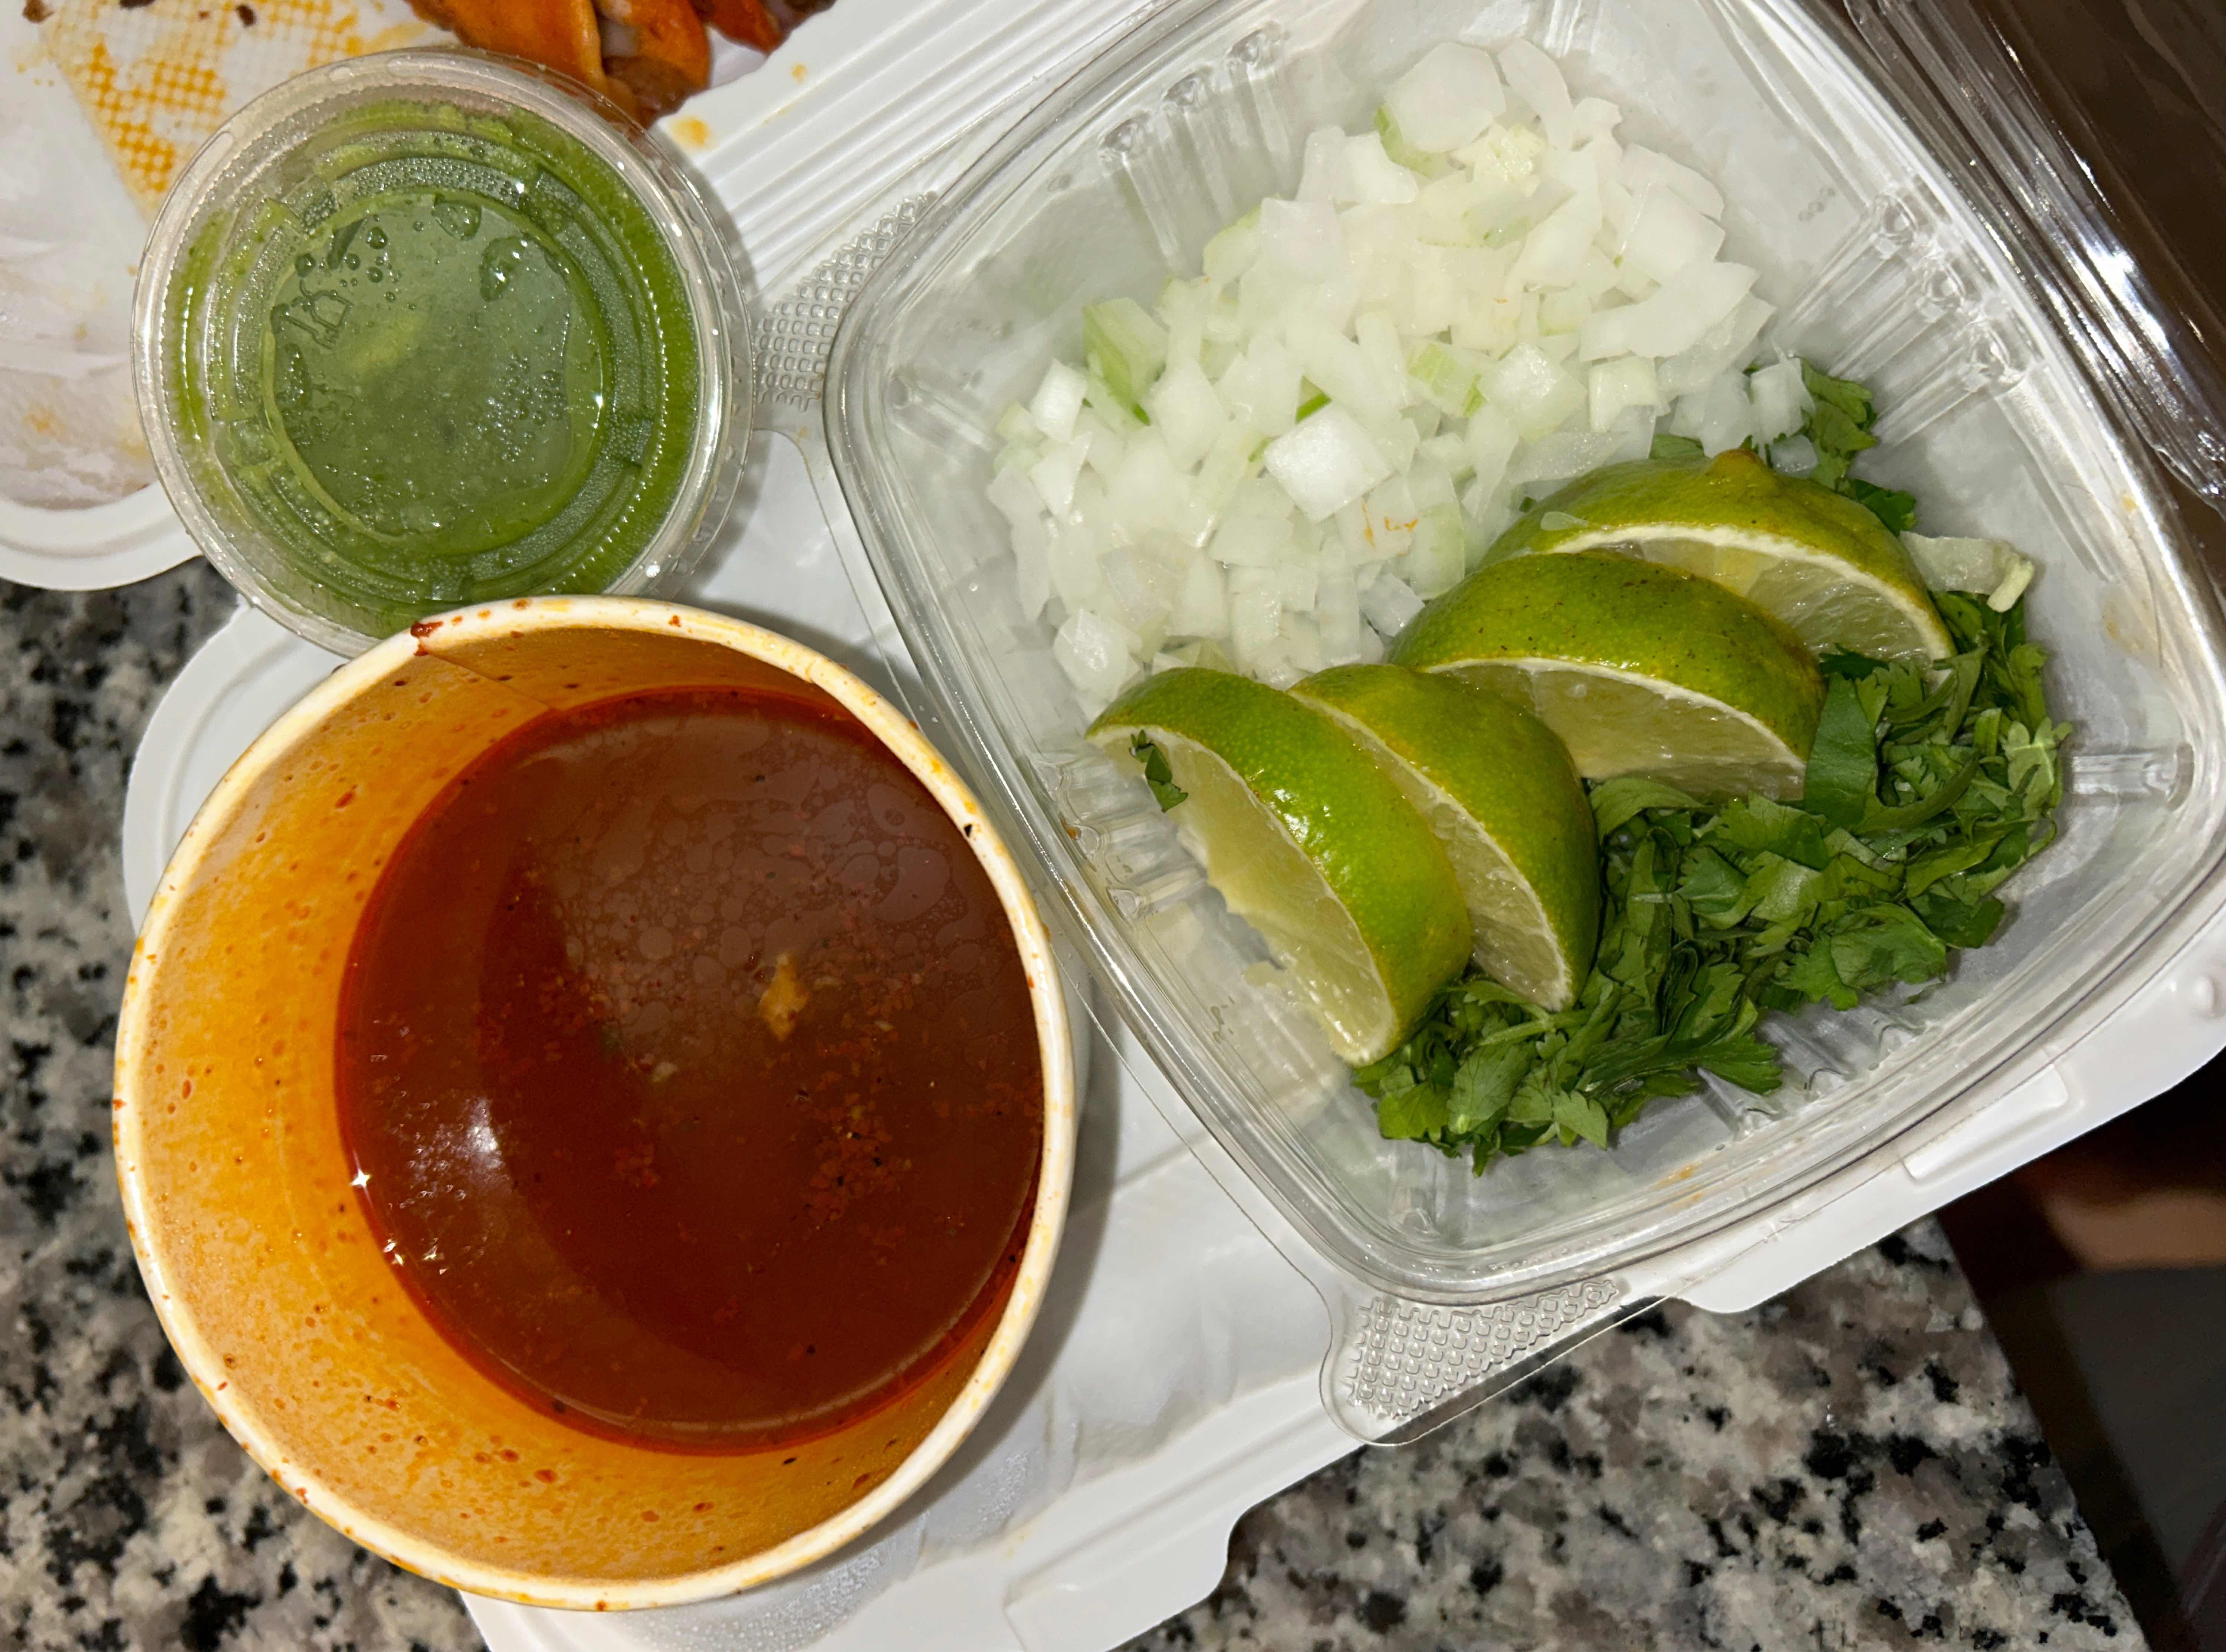 Red salsa vs Green salsa